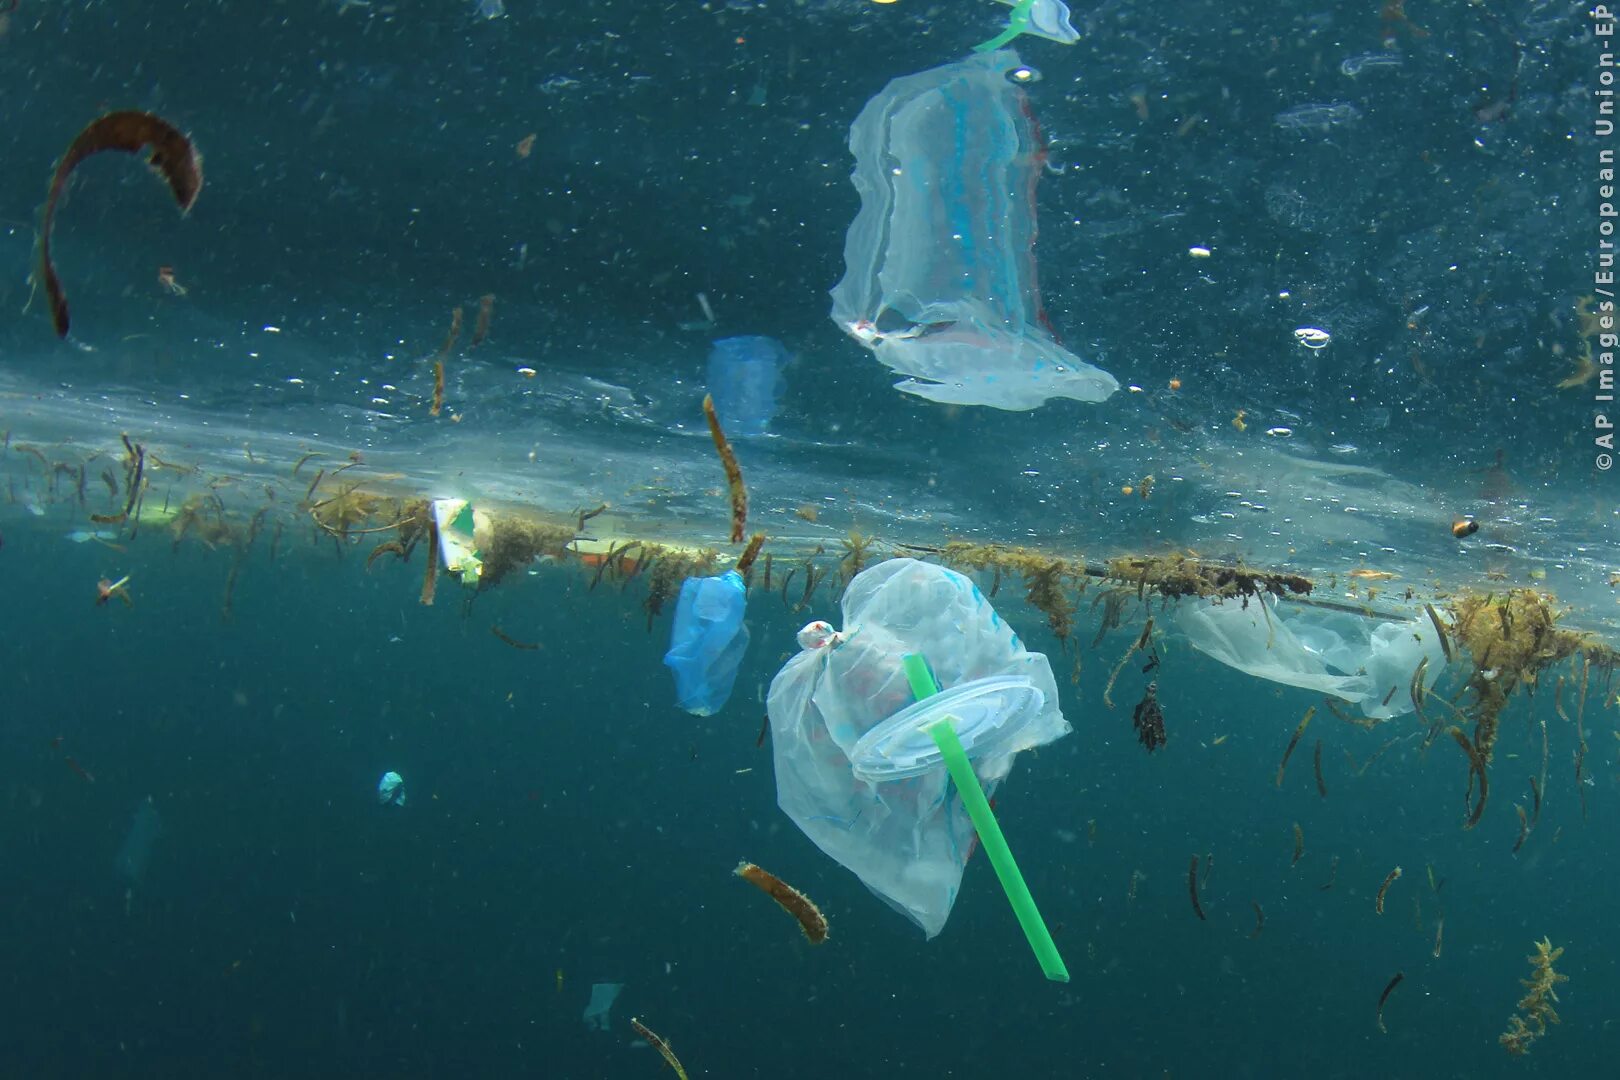 Пластик в океане. Пластик в мировом океане. Пластиковые трубочки в океане. Экология морей и океанов. На дне воздушного океана